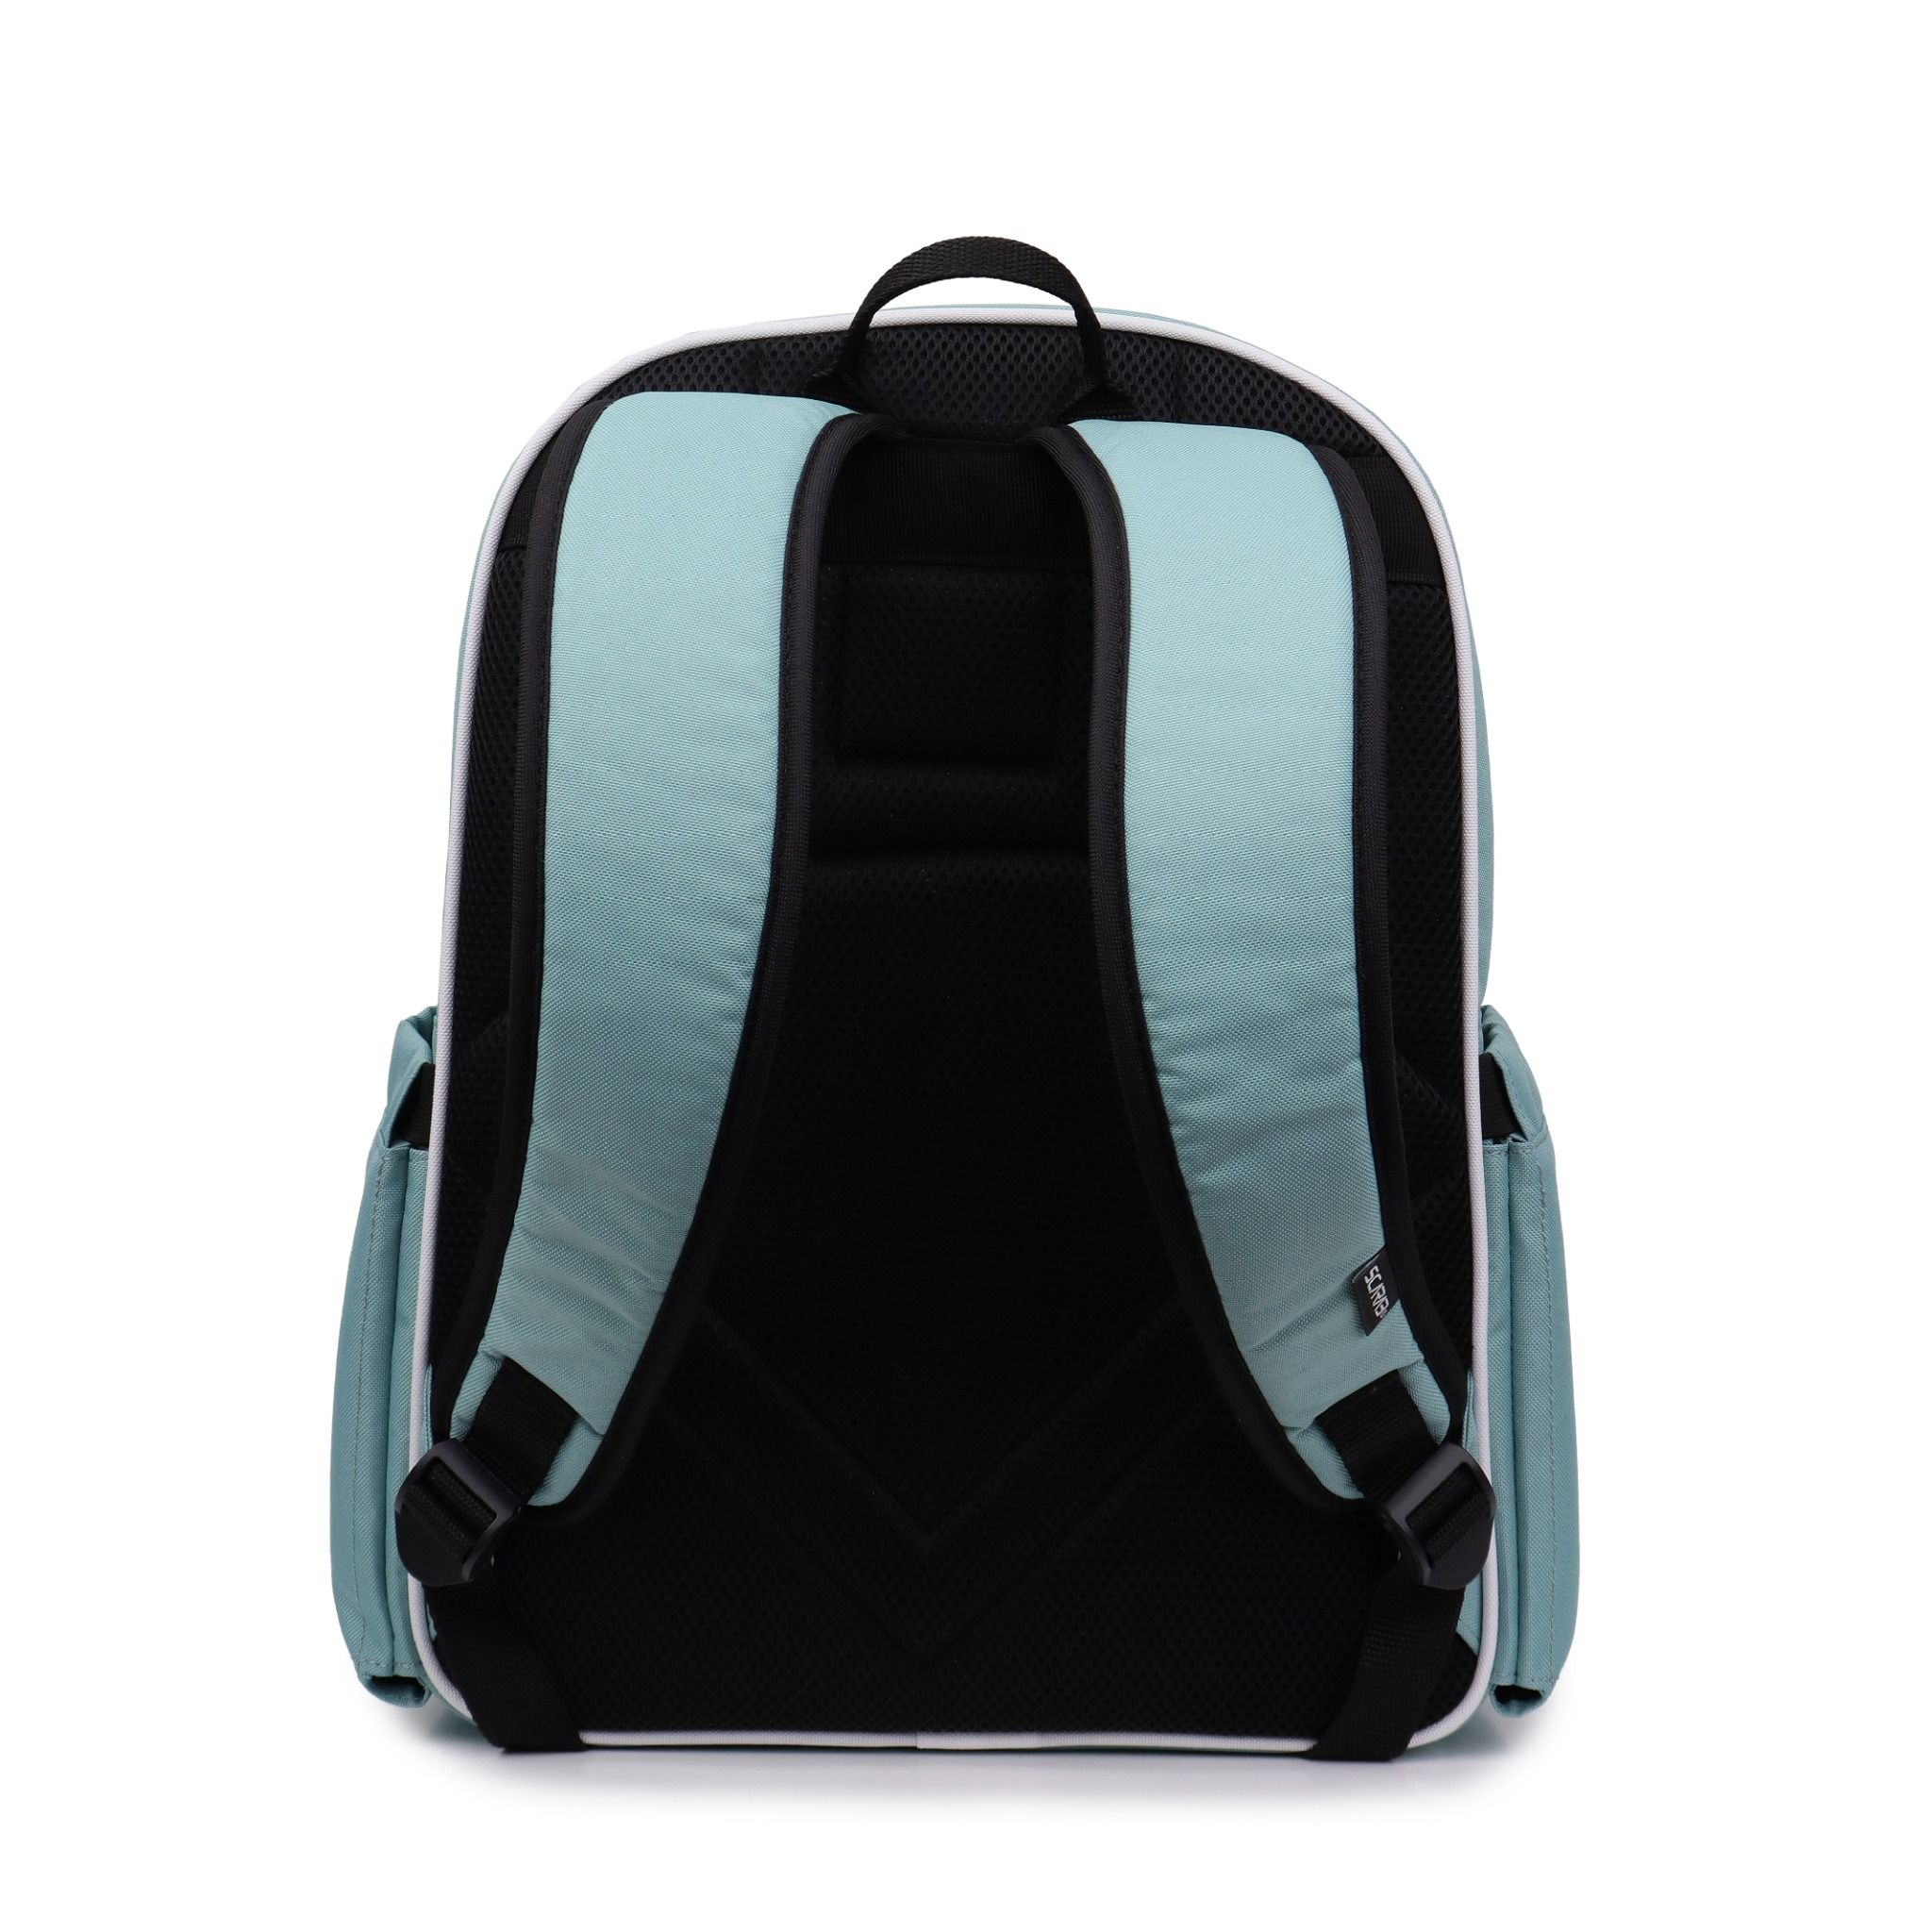  Daypack Backpack - Teal 